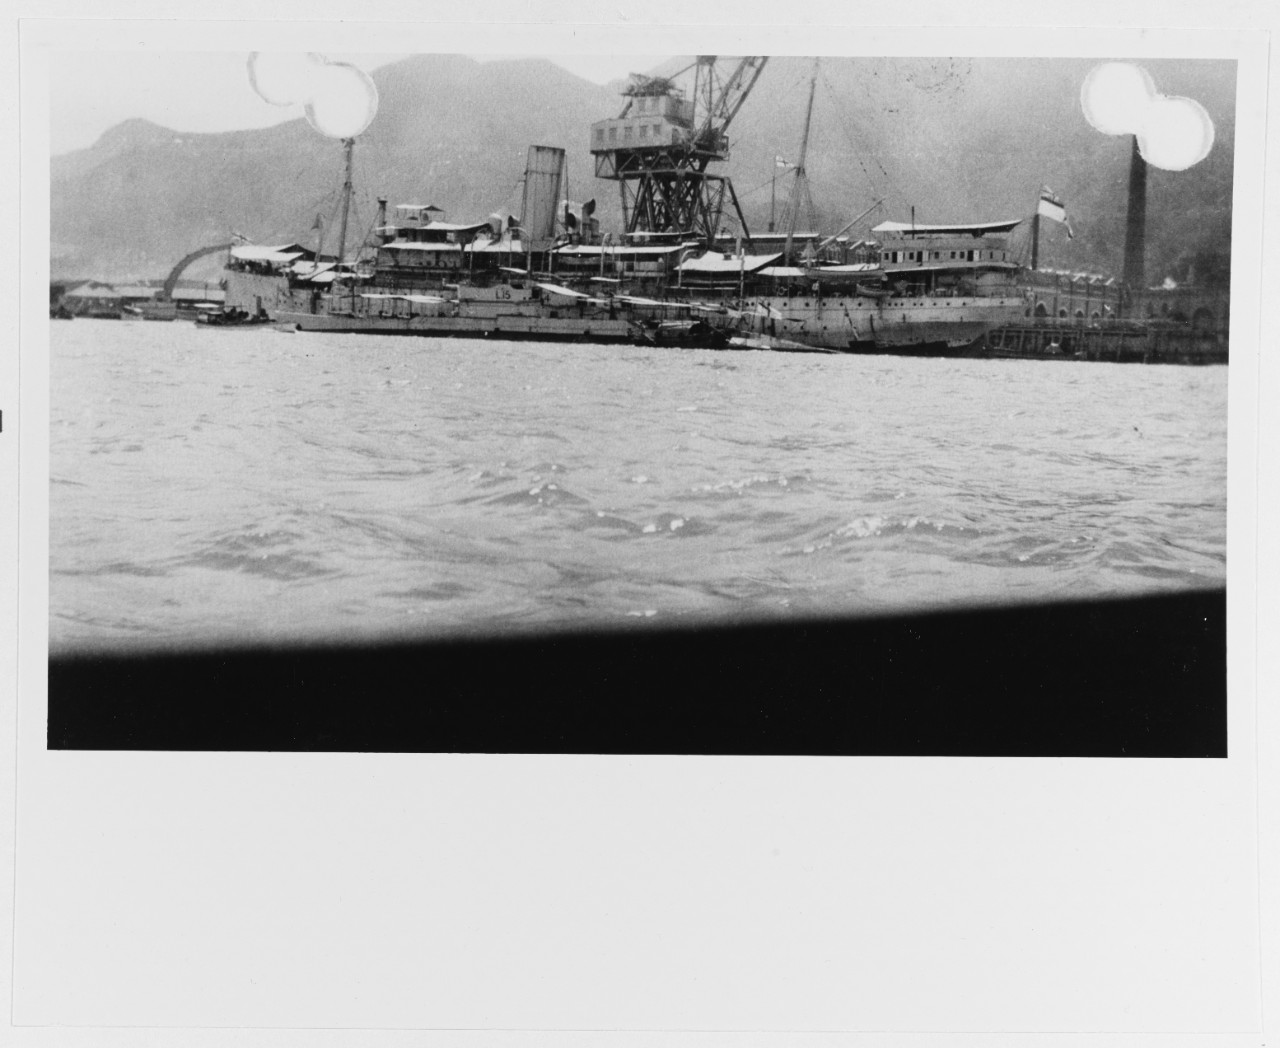 AMBROSE (British submarine depot ship, 1915)